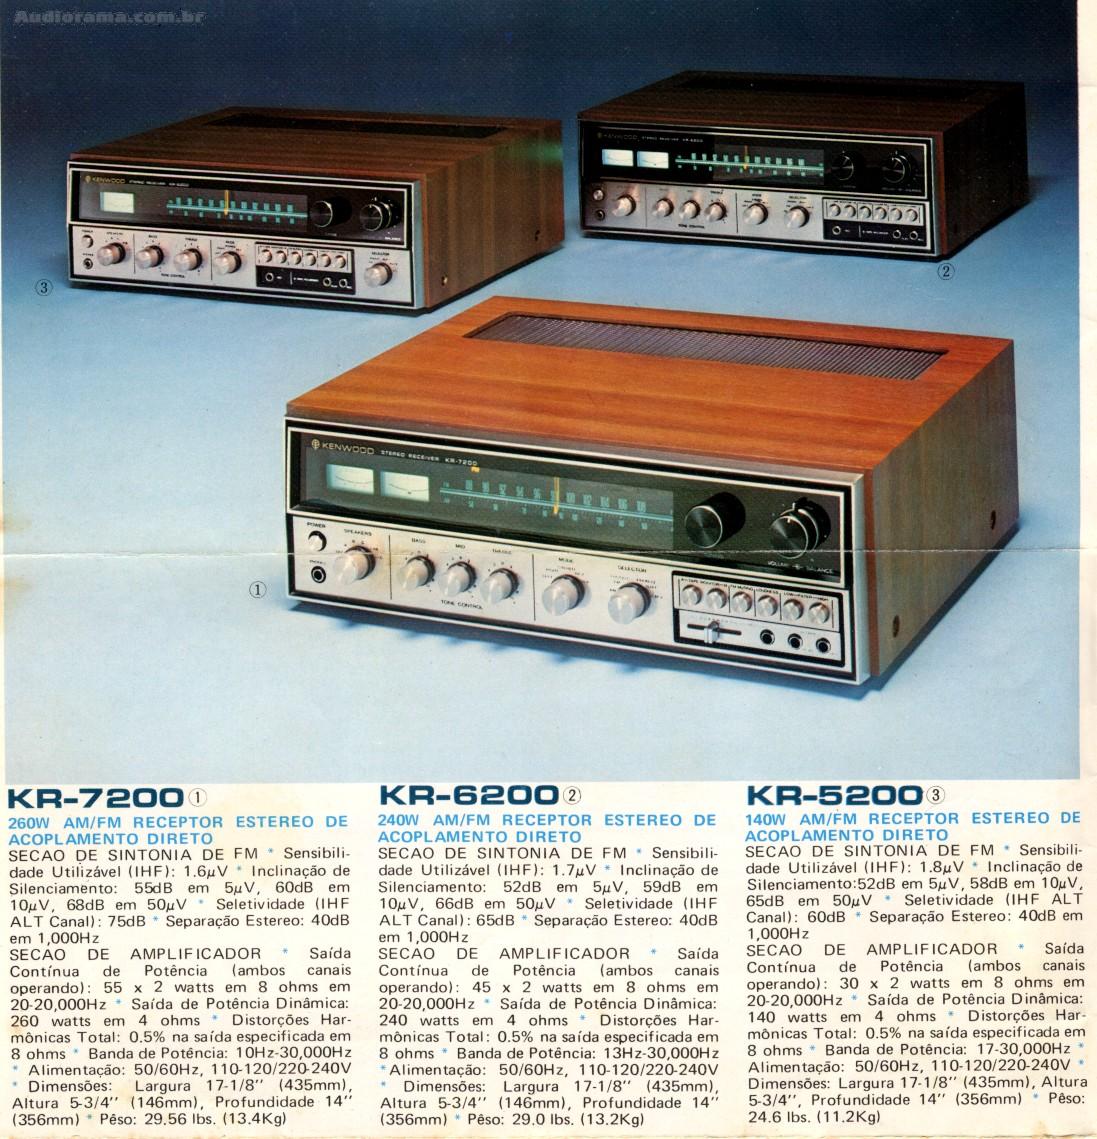 Kenwood KR-7200 i gramofon - Winyl.net